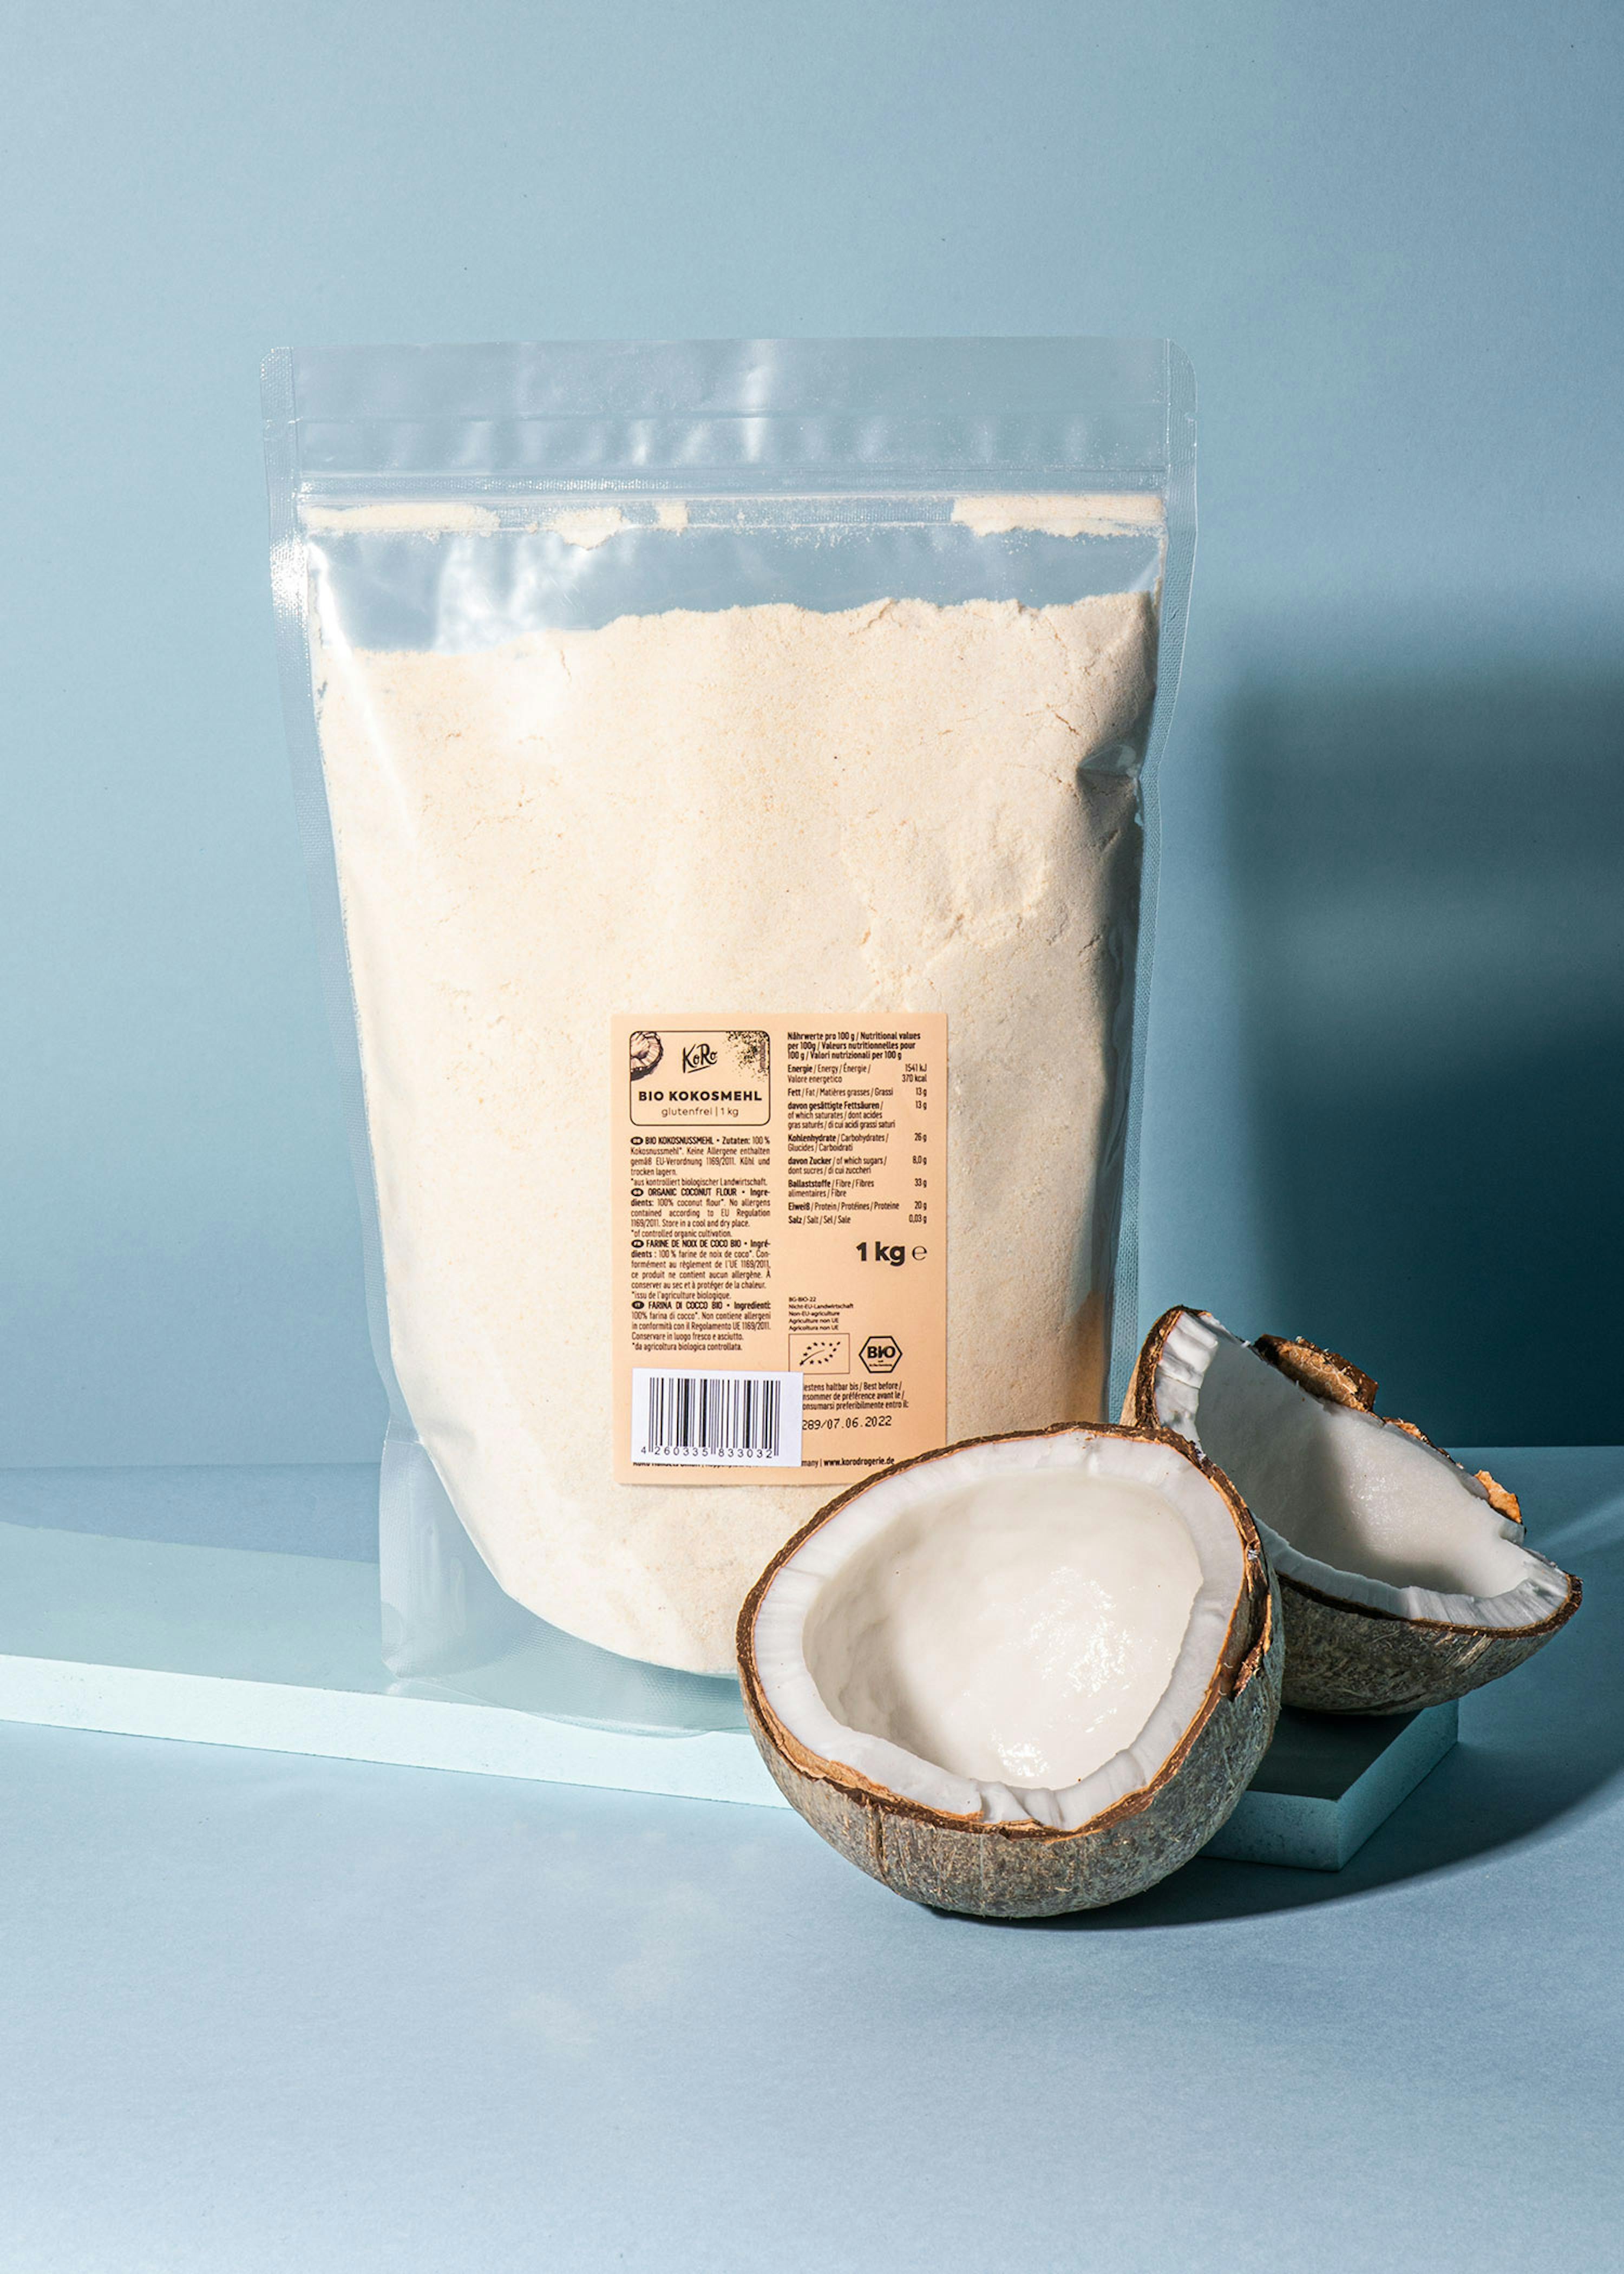 Farine de coco bio & équitable, - 250 g